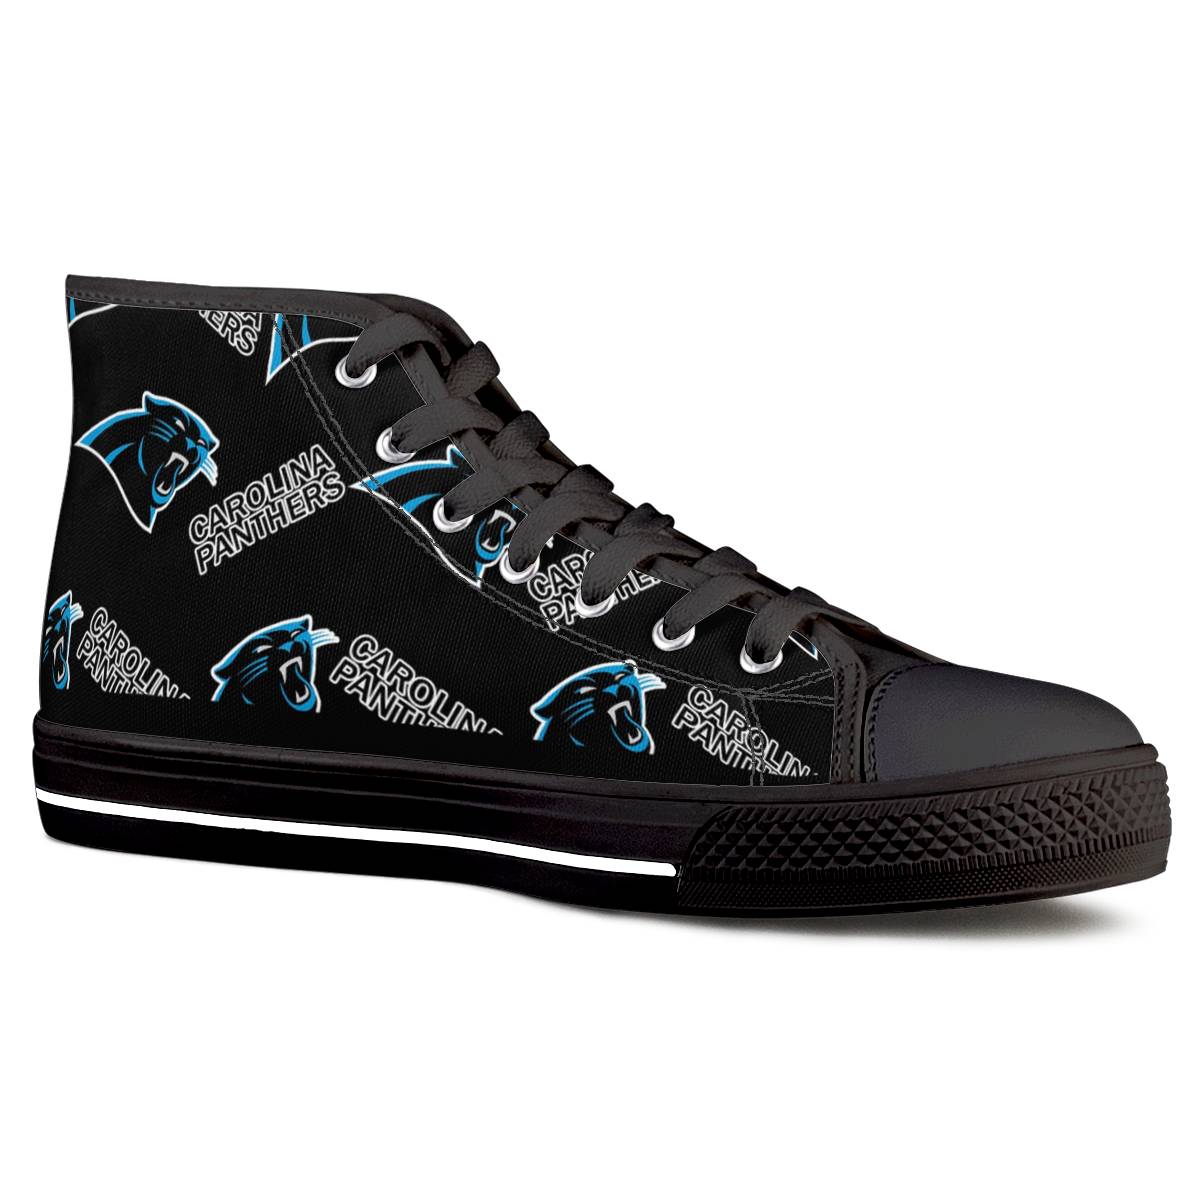 Women's Carolina Panthers High Top Canvas Sneakers 004